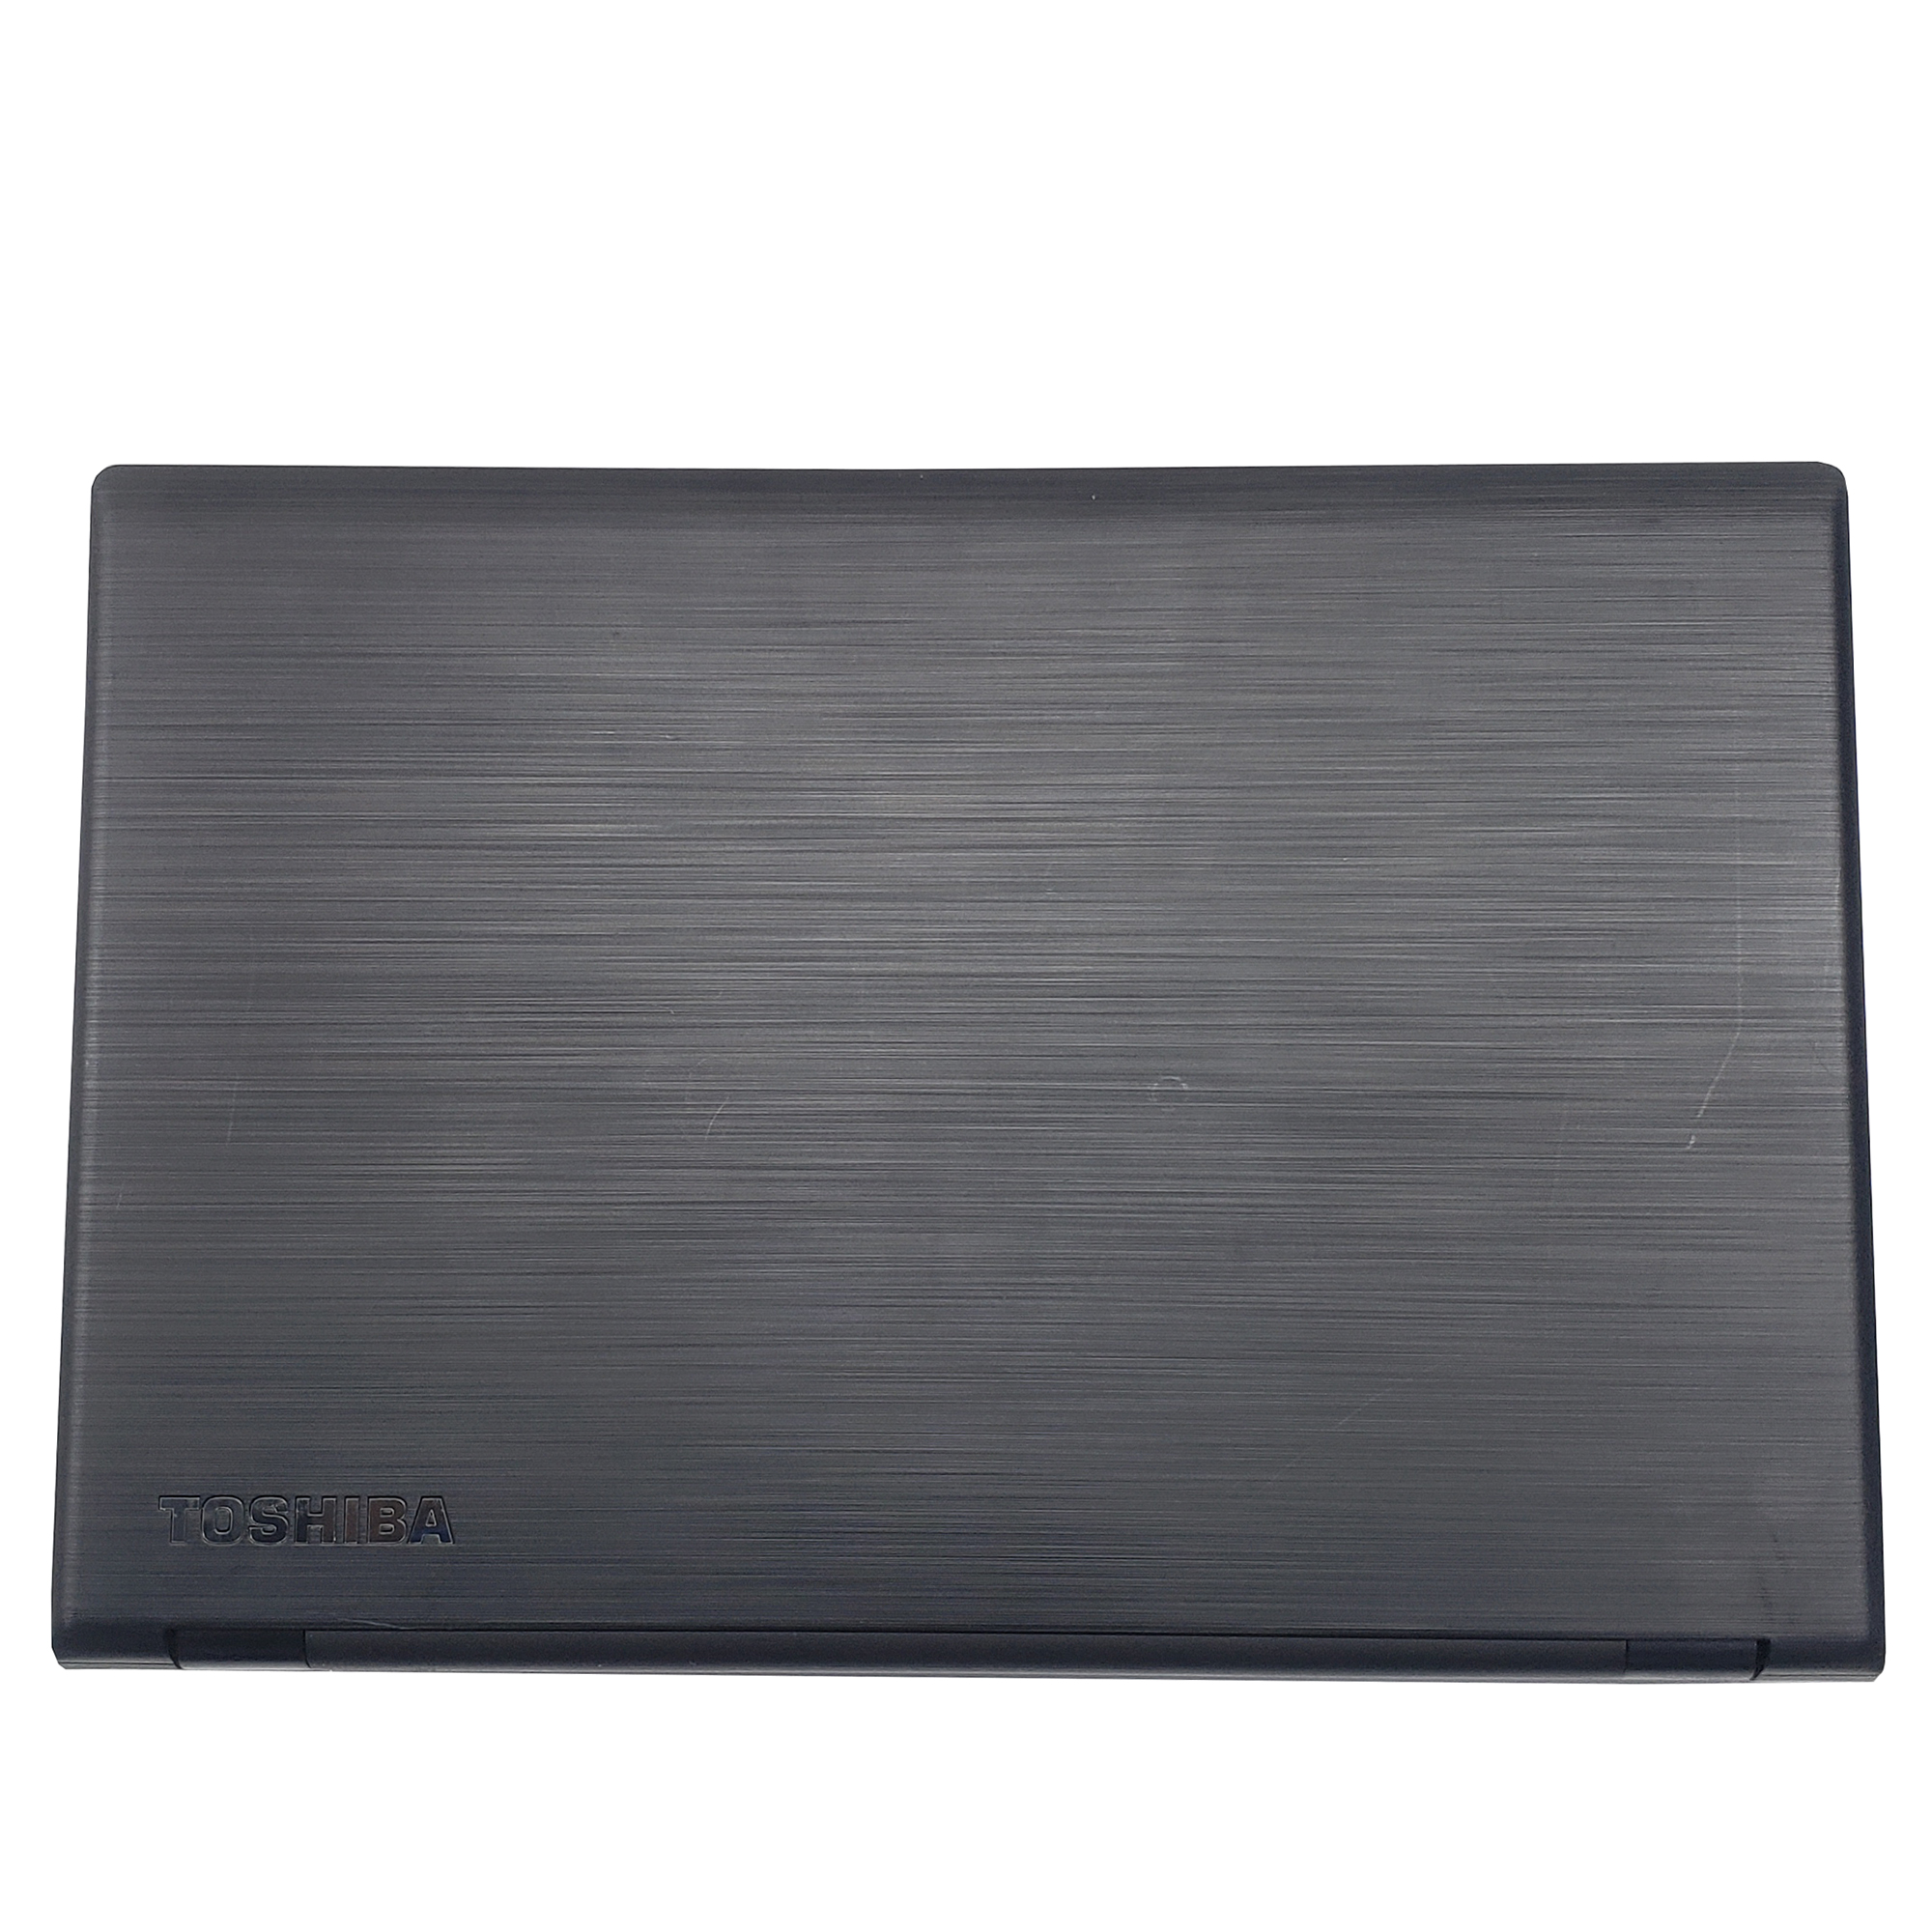 Toshiba Dynabook Satellite B35/R, i5-5200M, 2.2GHZ, 4GB Ram, 500GB HDD, Intel HD Graphics 5500, 15.6, Eng/Jap Kb, Black (Refurbished) - PB35READ4R5JD81